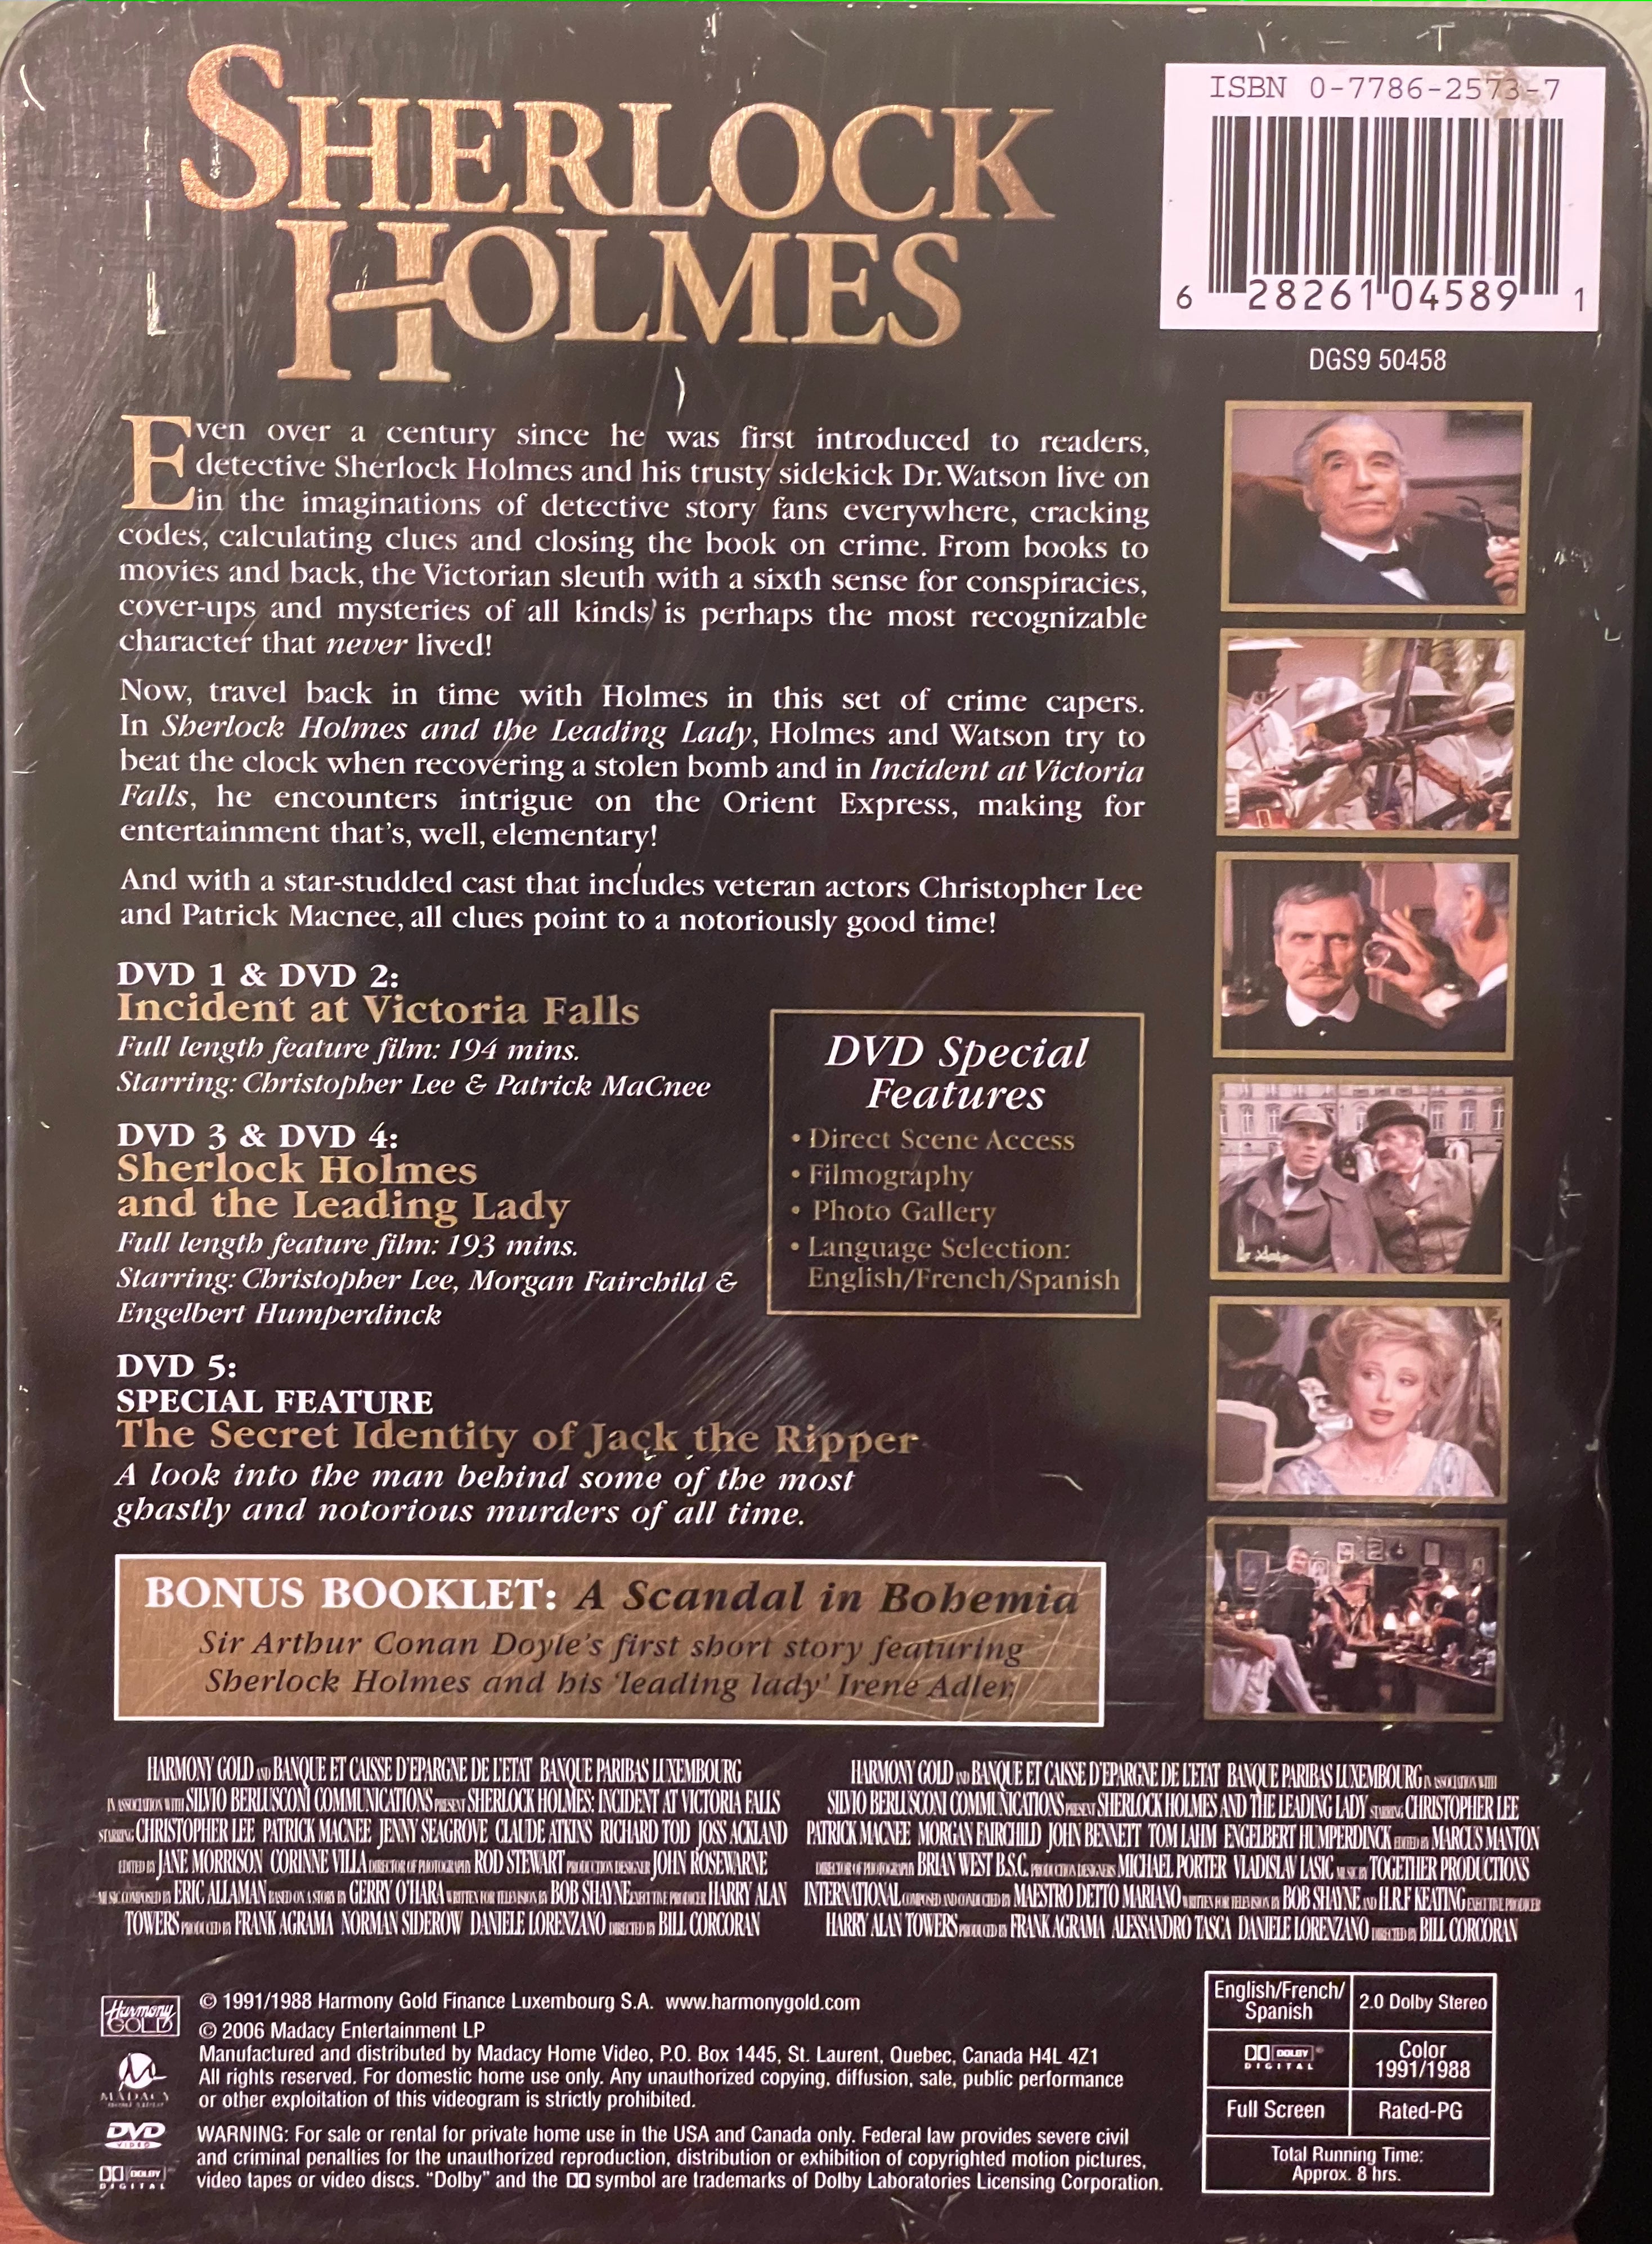 Rental - DVD - Sherlock Holmes - Collectors Edition Tin - triple feature